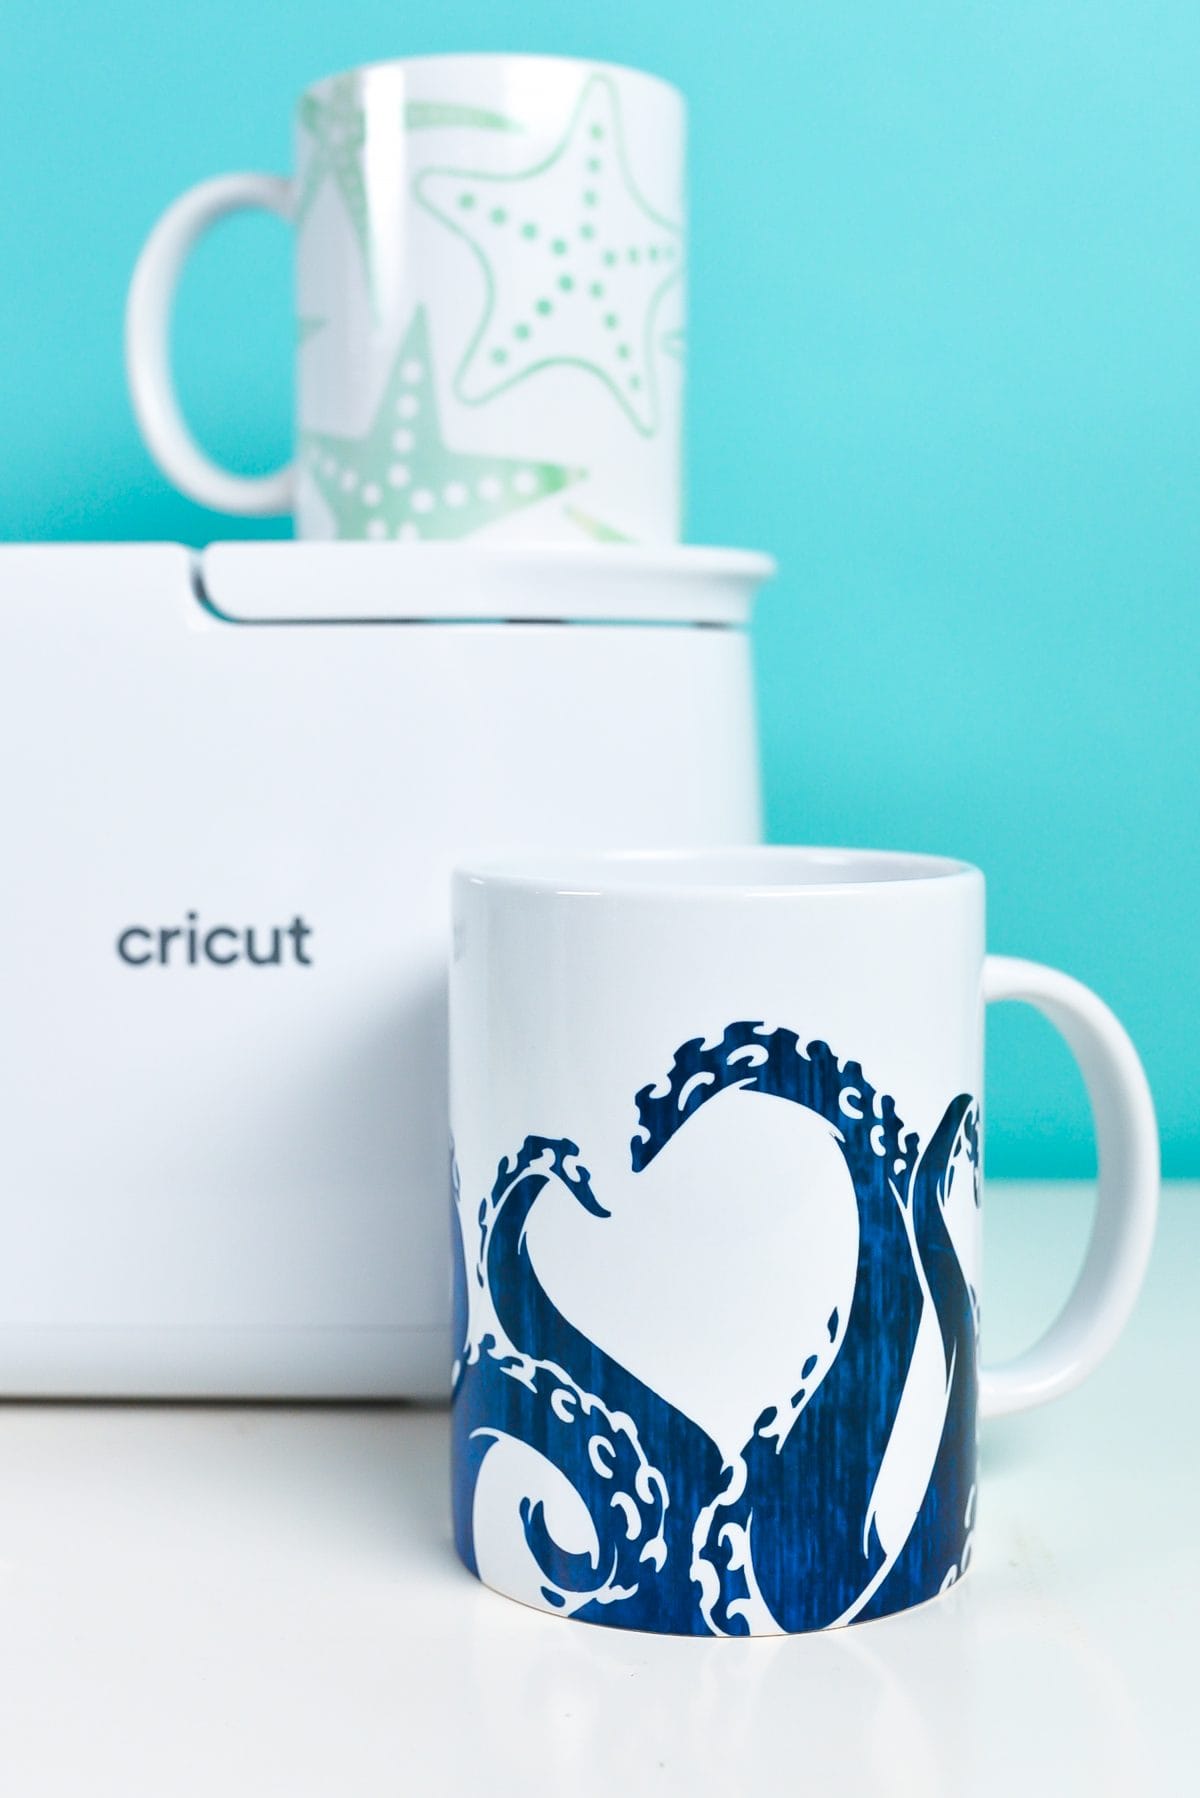 octapus tenticles on a mug